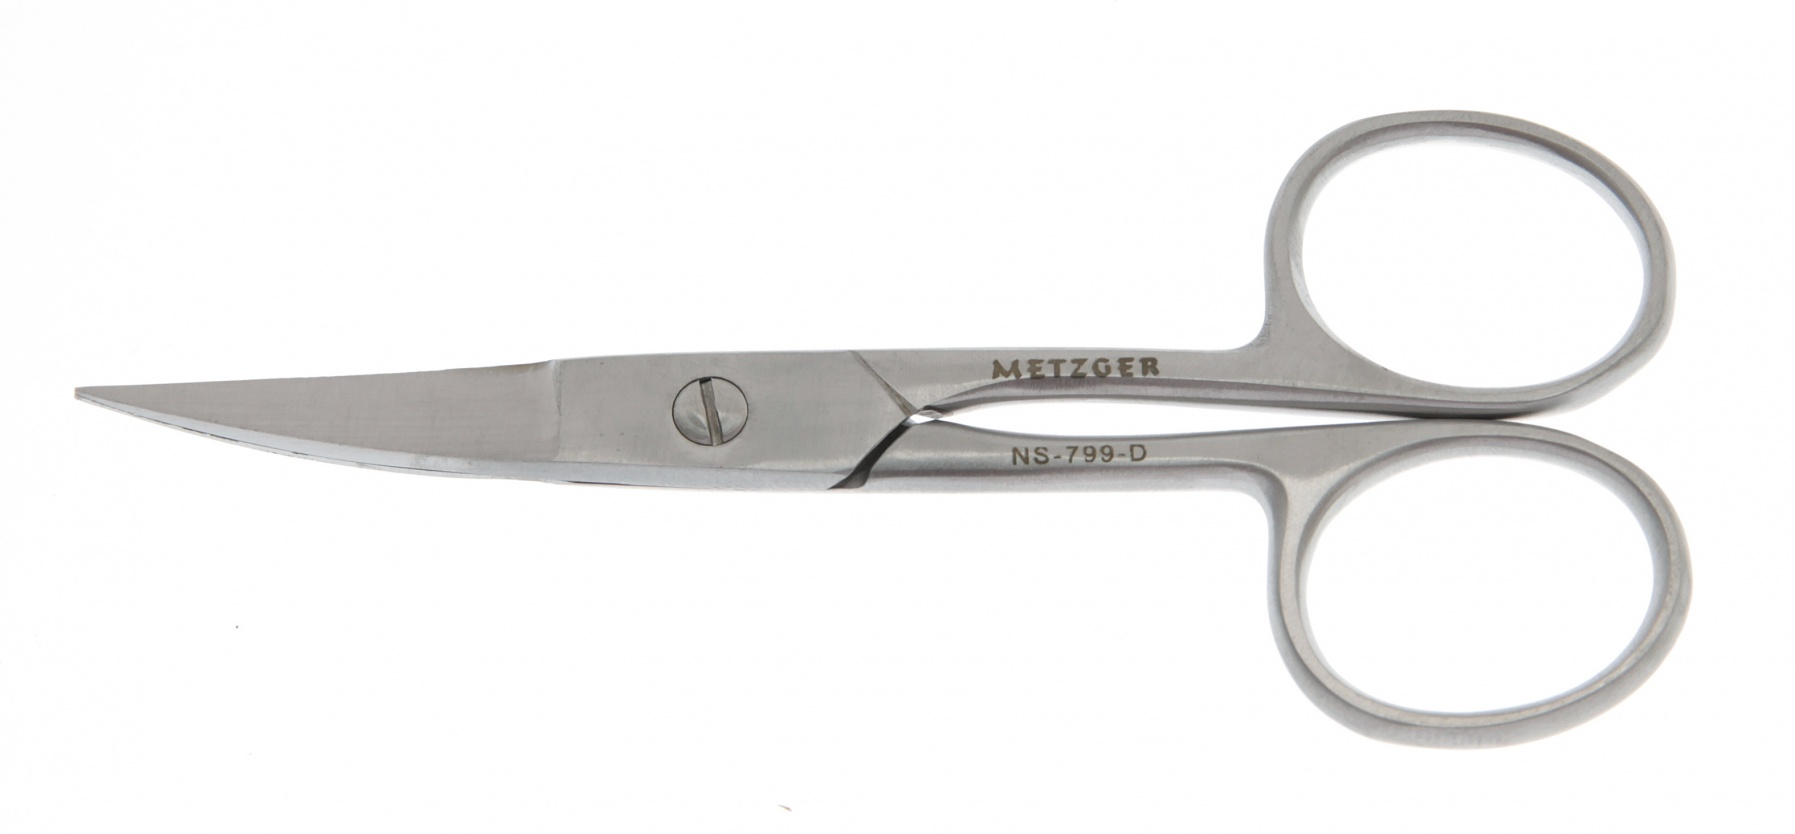 METZGER Ножницы для ногтей NS-799-D(CVD) metzger ножницы для носа cn 300 s st 10 см